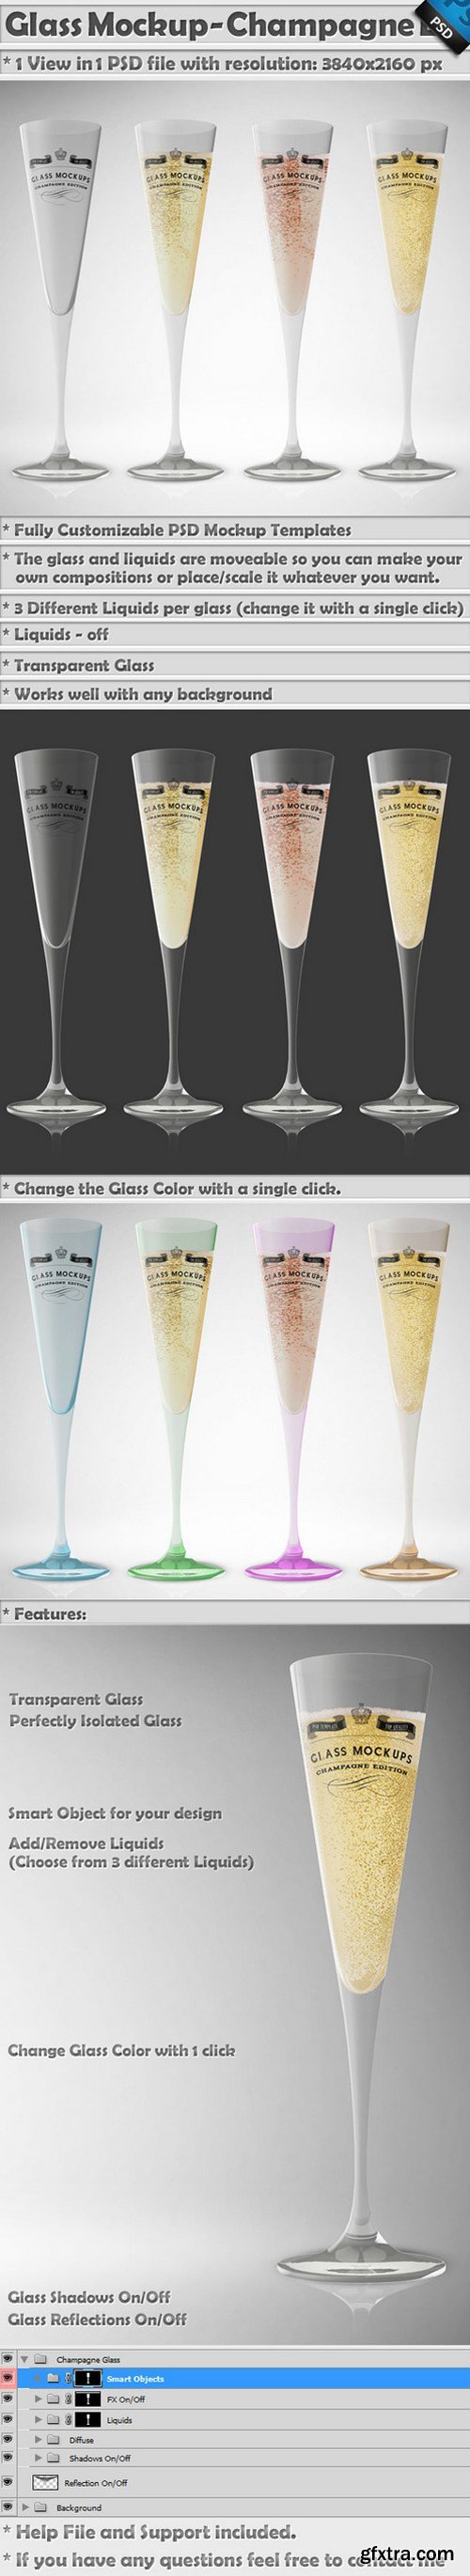 CM - Glass Mockup - Champagne Glass Vol 8 886616